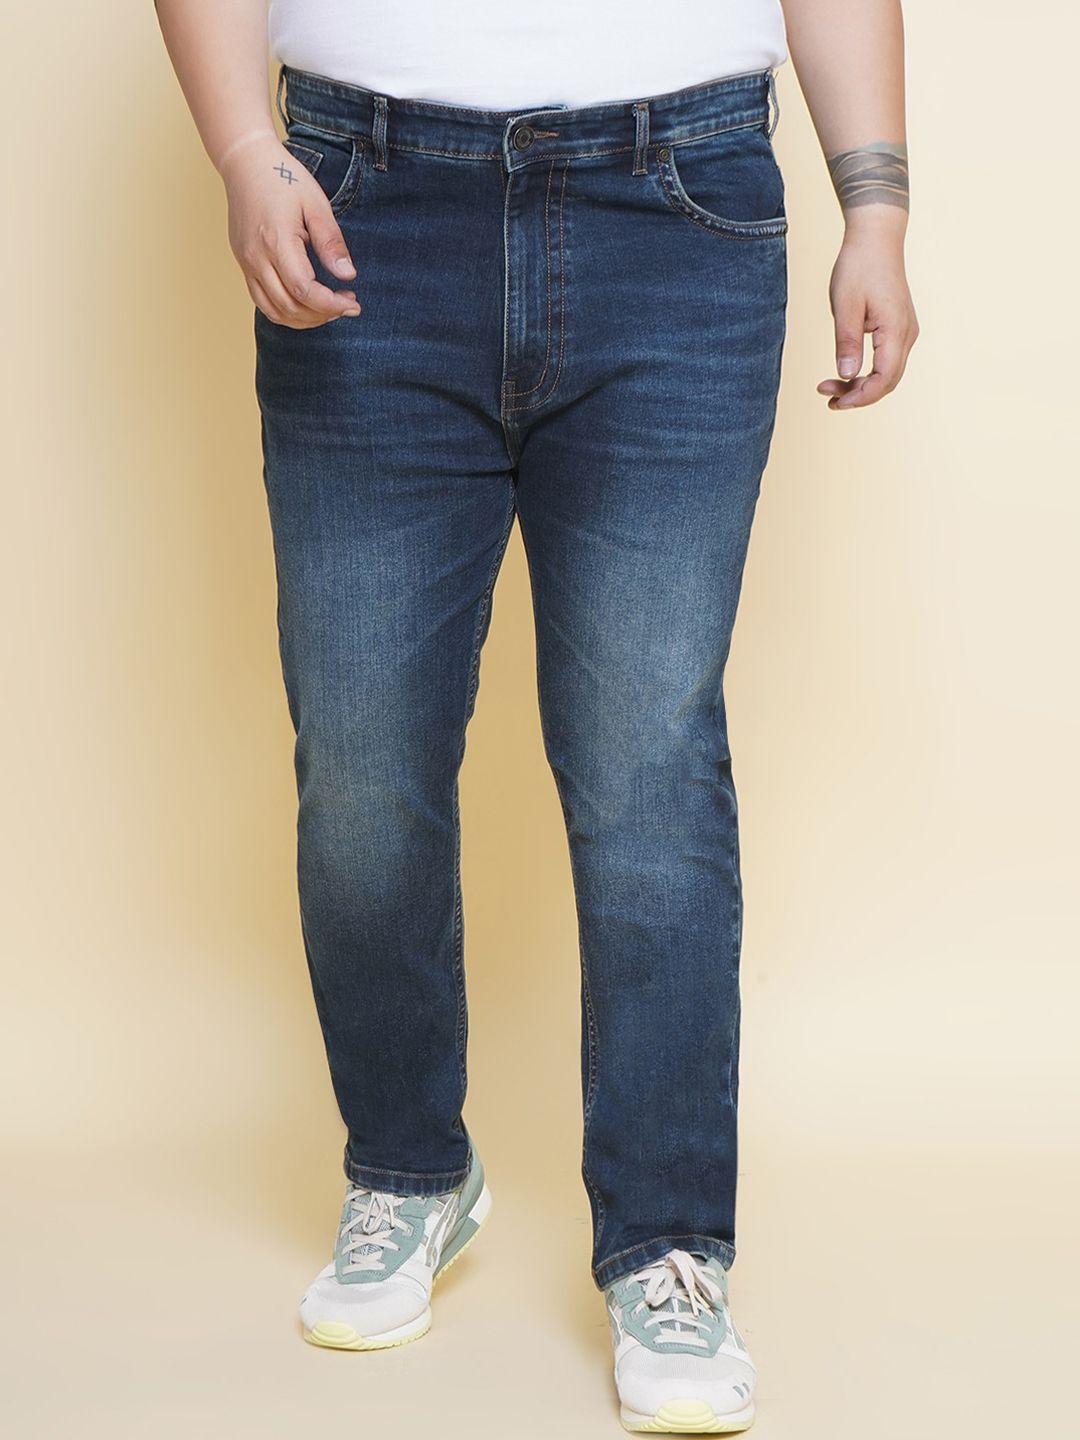 john pride men jean regular fit mid-rise light fade cotton stretchable jeans